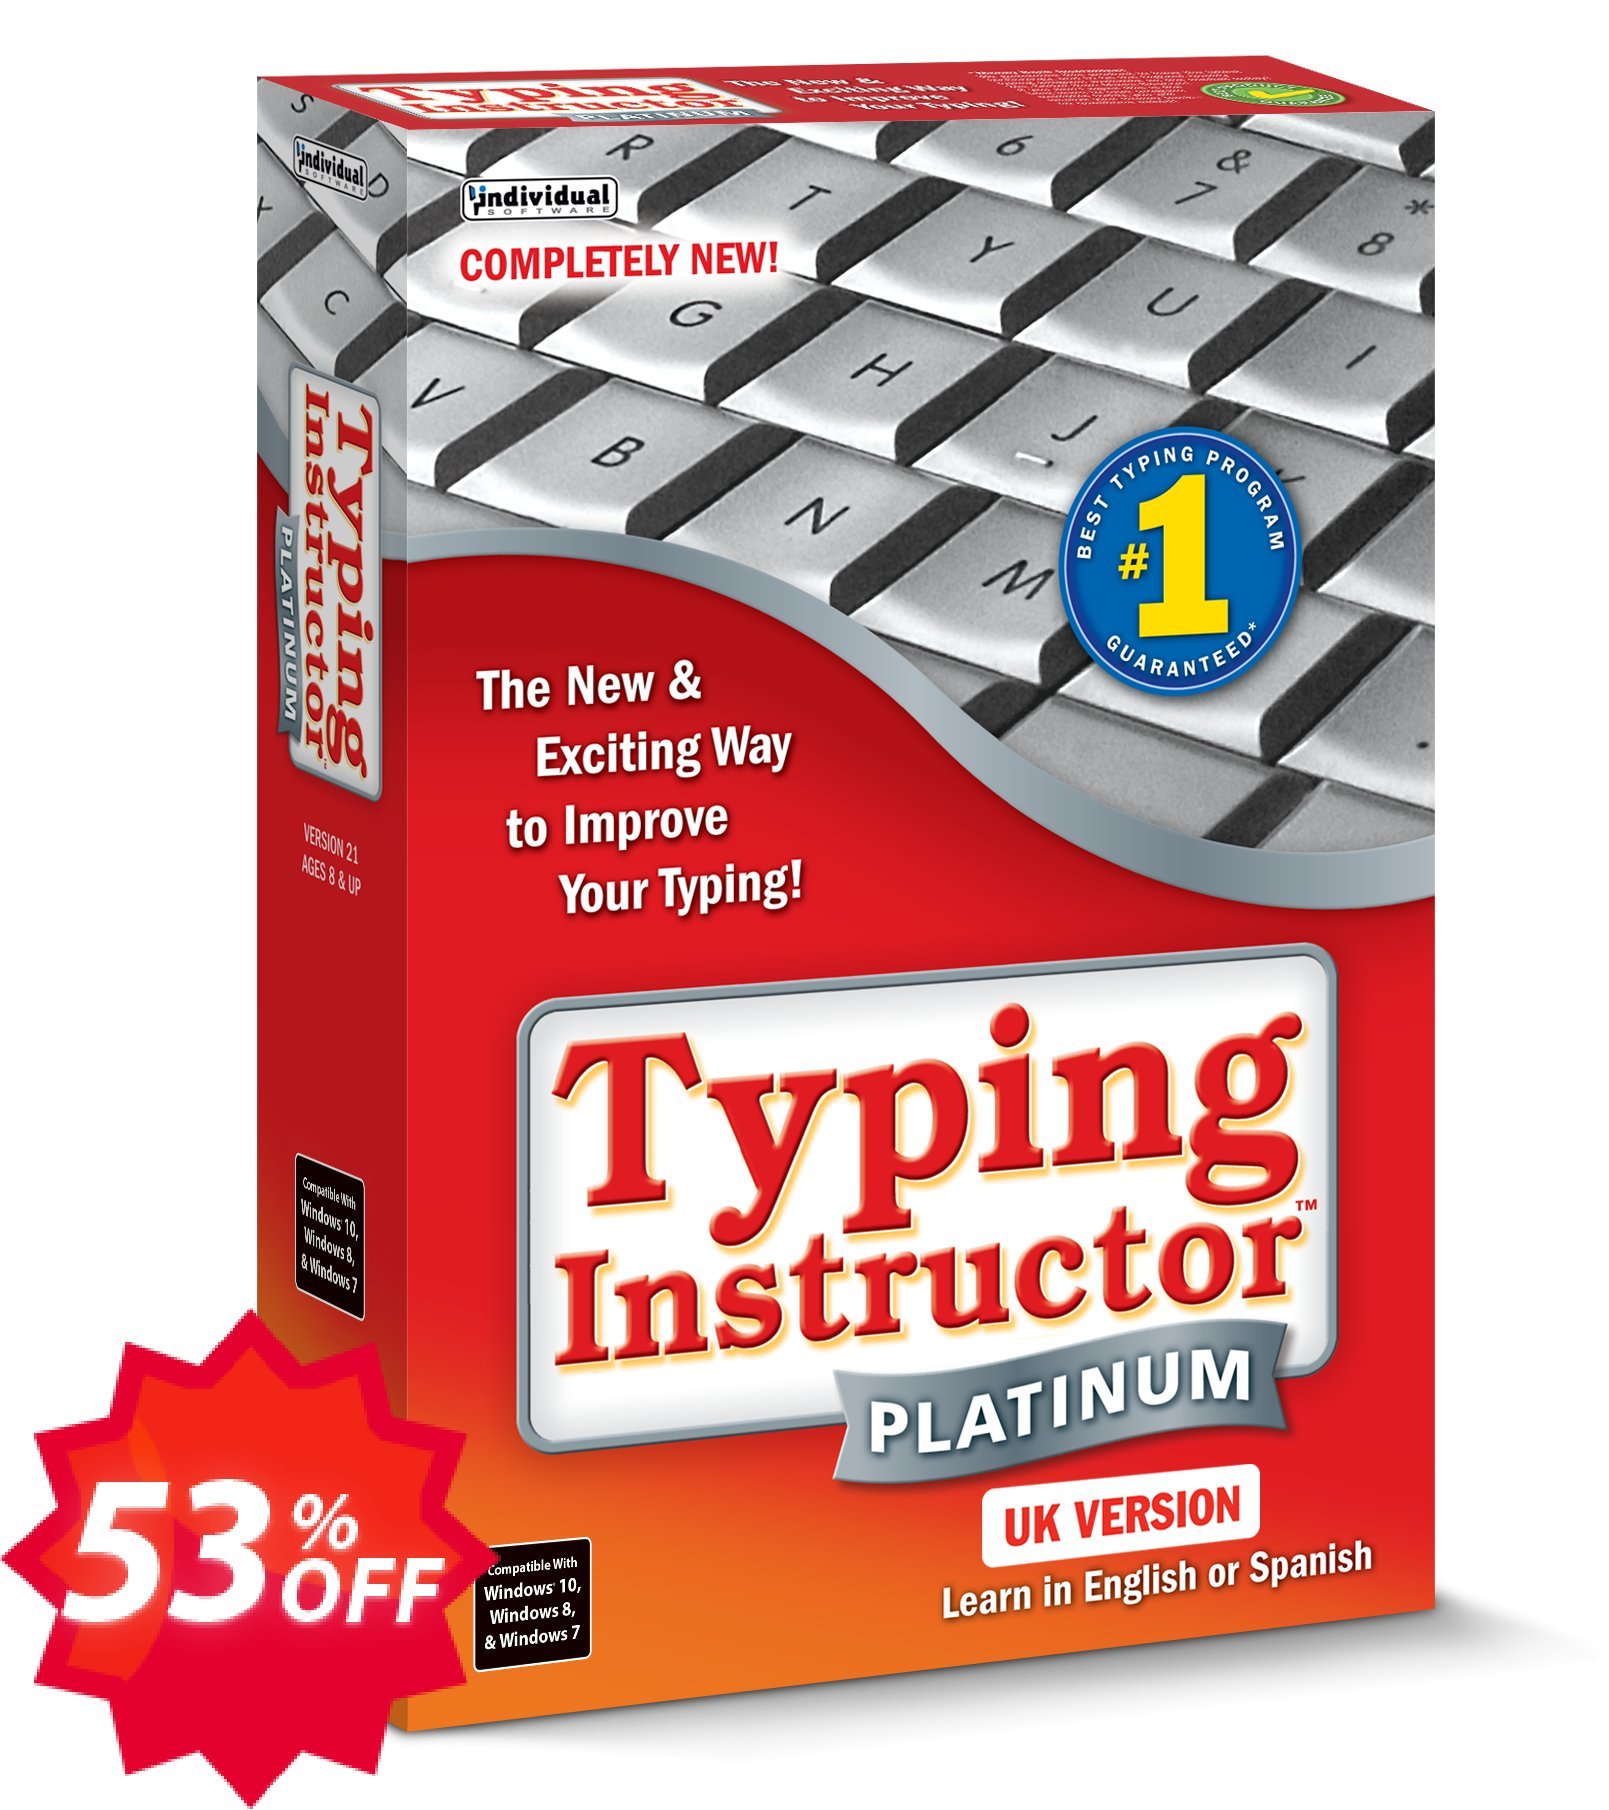 Typing Instructor Platinum - International Version US Keyboard Coupon code 53% discount 